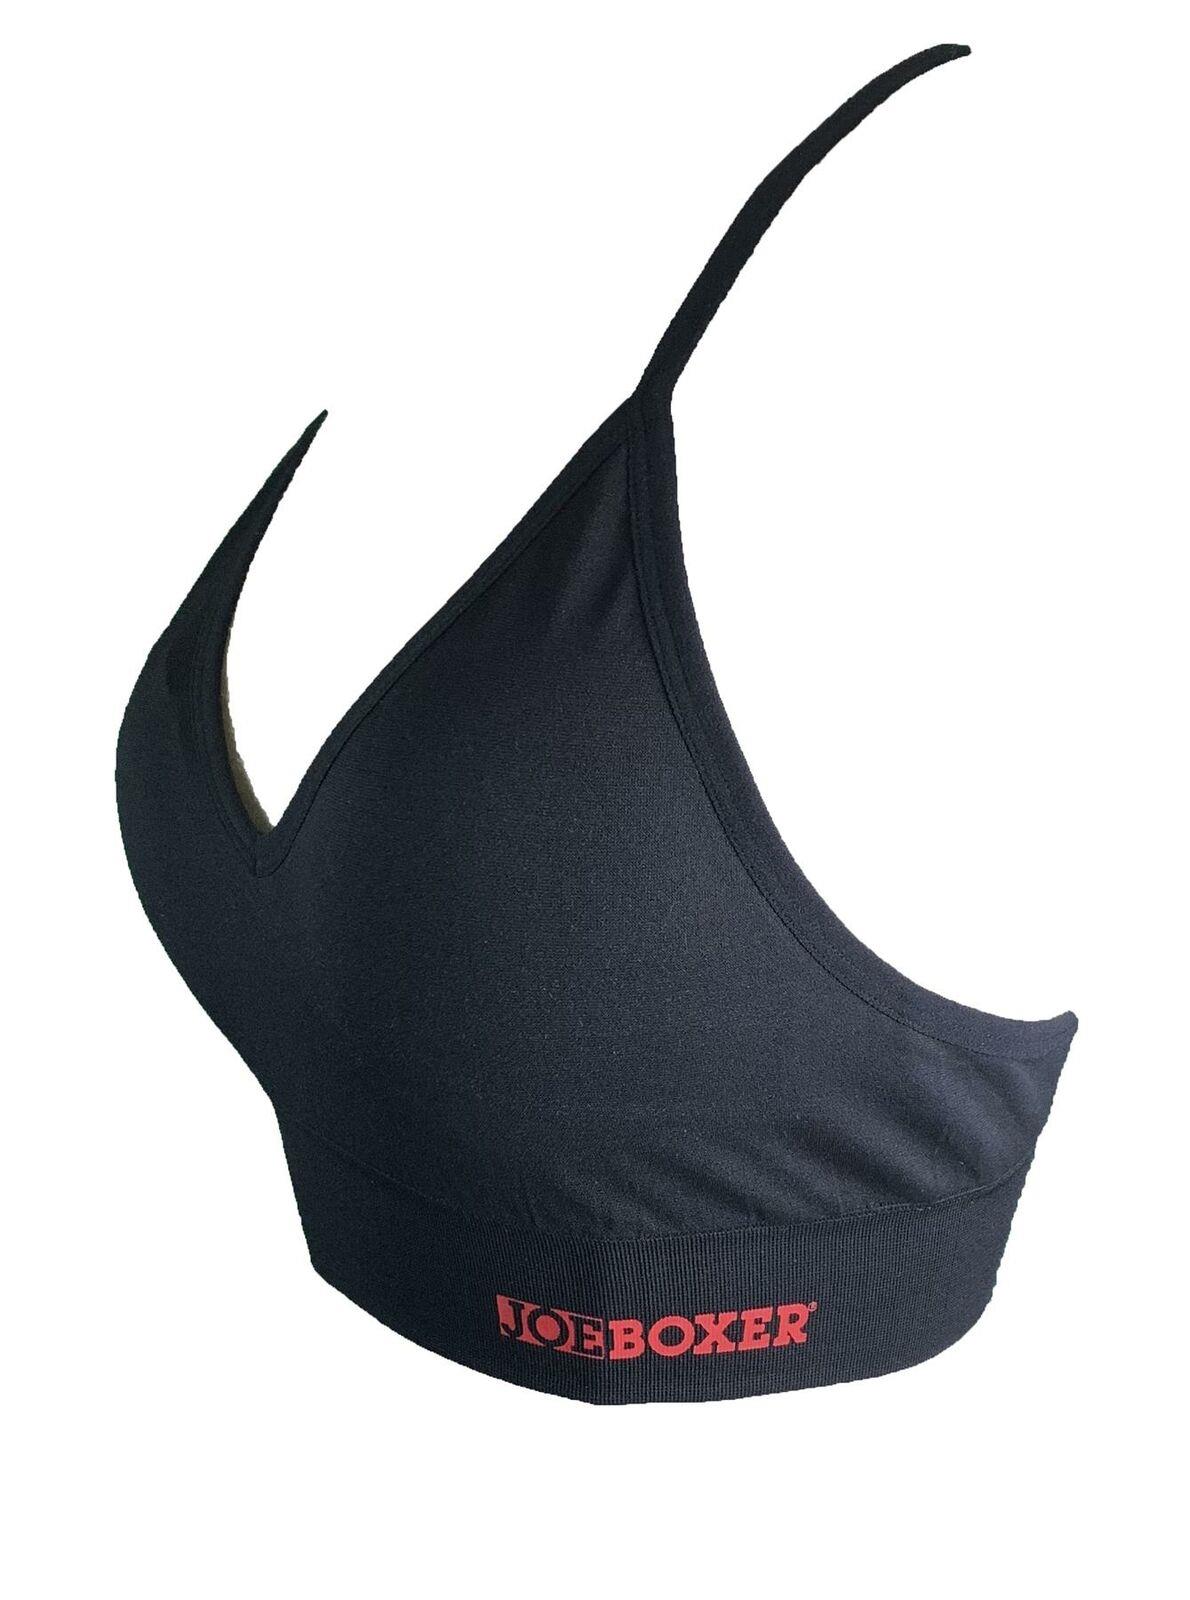 3-Pack Joe Boxer Sports Bras Non-Wired Soft Padded Bralette Black Multipack New